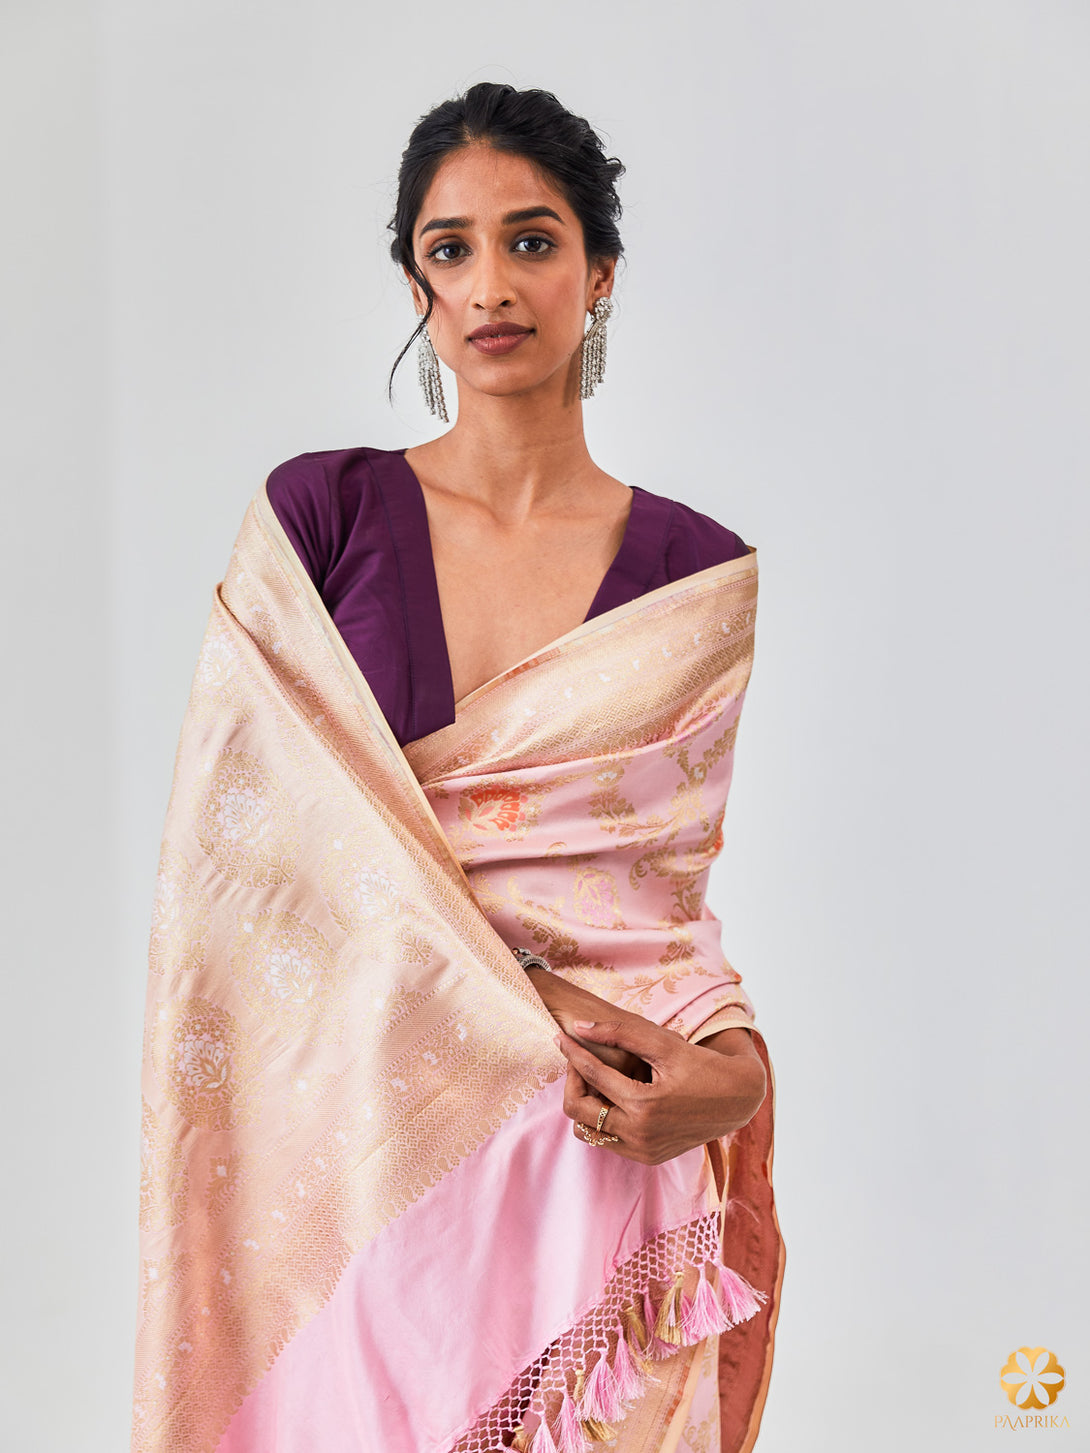 Beautiful Drape of Enchanting Pastel Rose Banarasi Saree - Sophistication and Delicacy Personified.